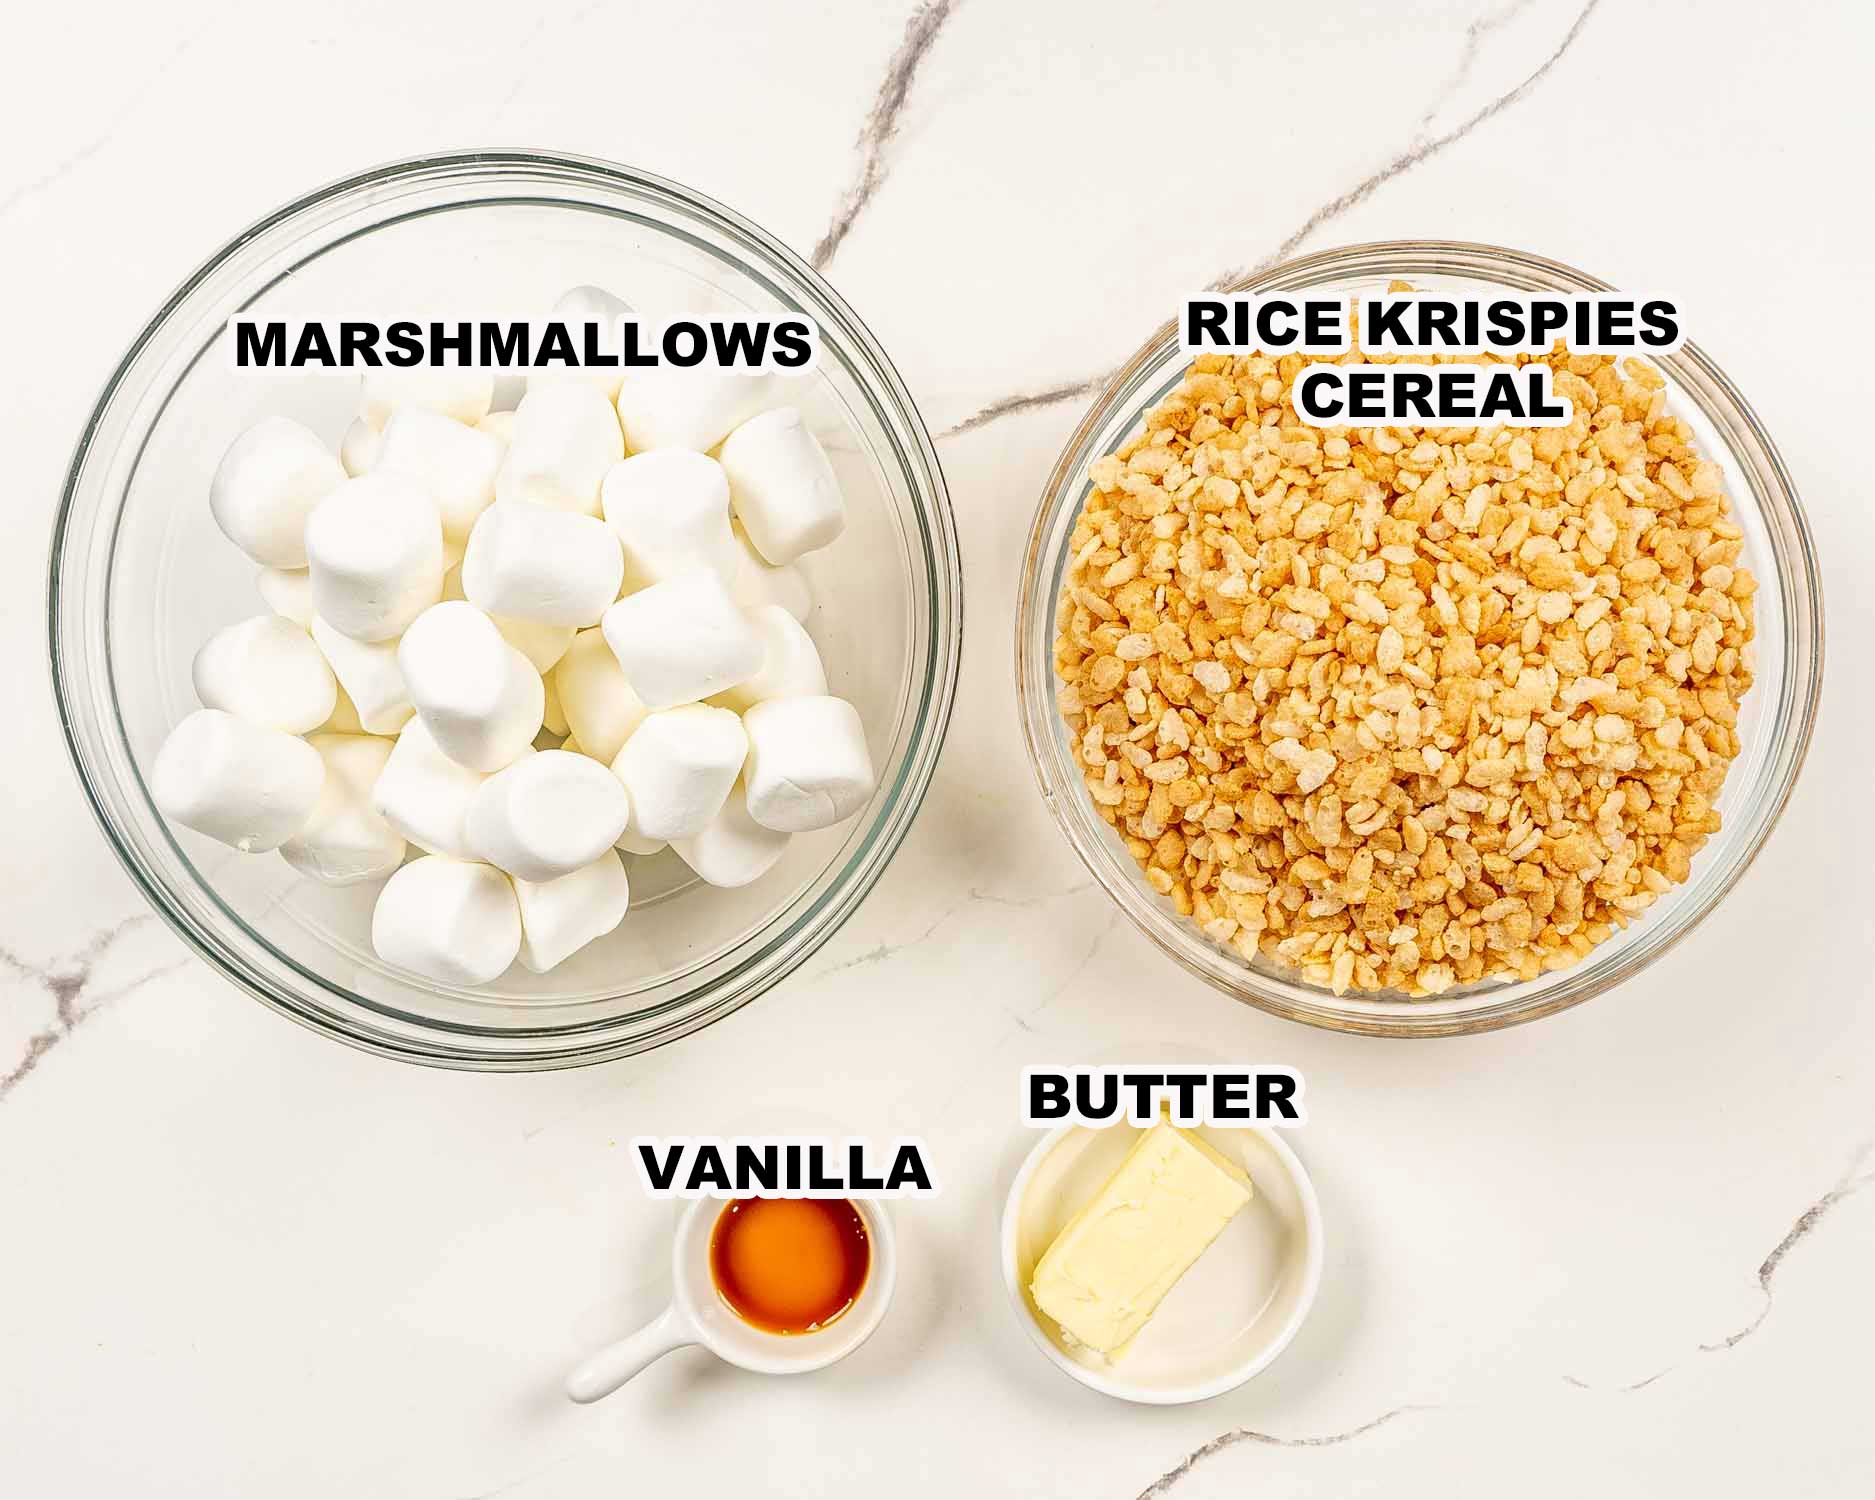 ingredients needed to make rice krispie treats.